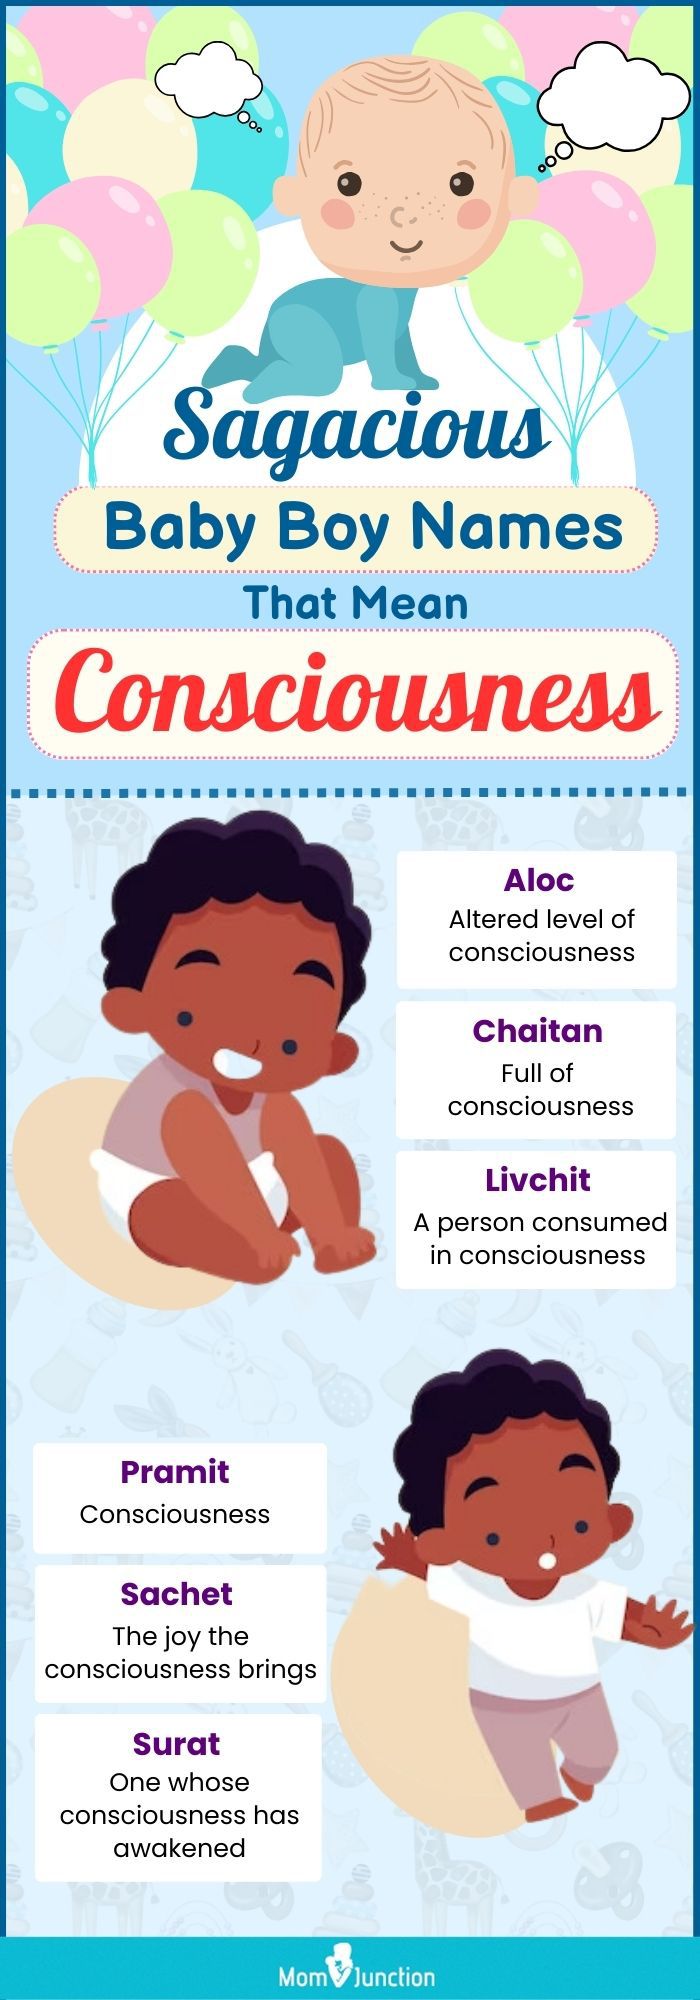 sagacious baby boy names that mean conciousness (infographic)